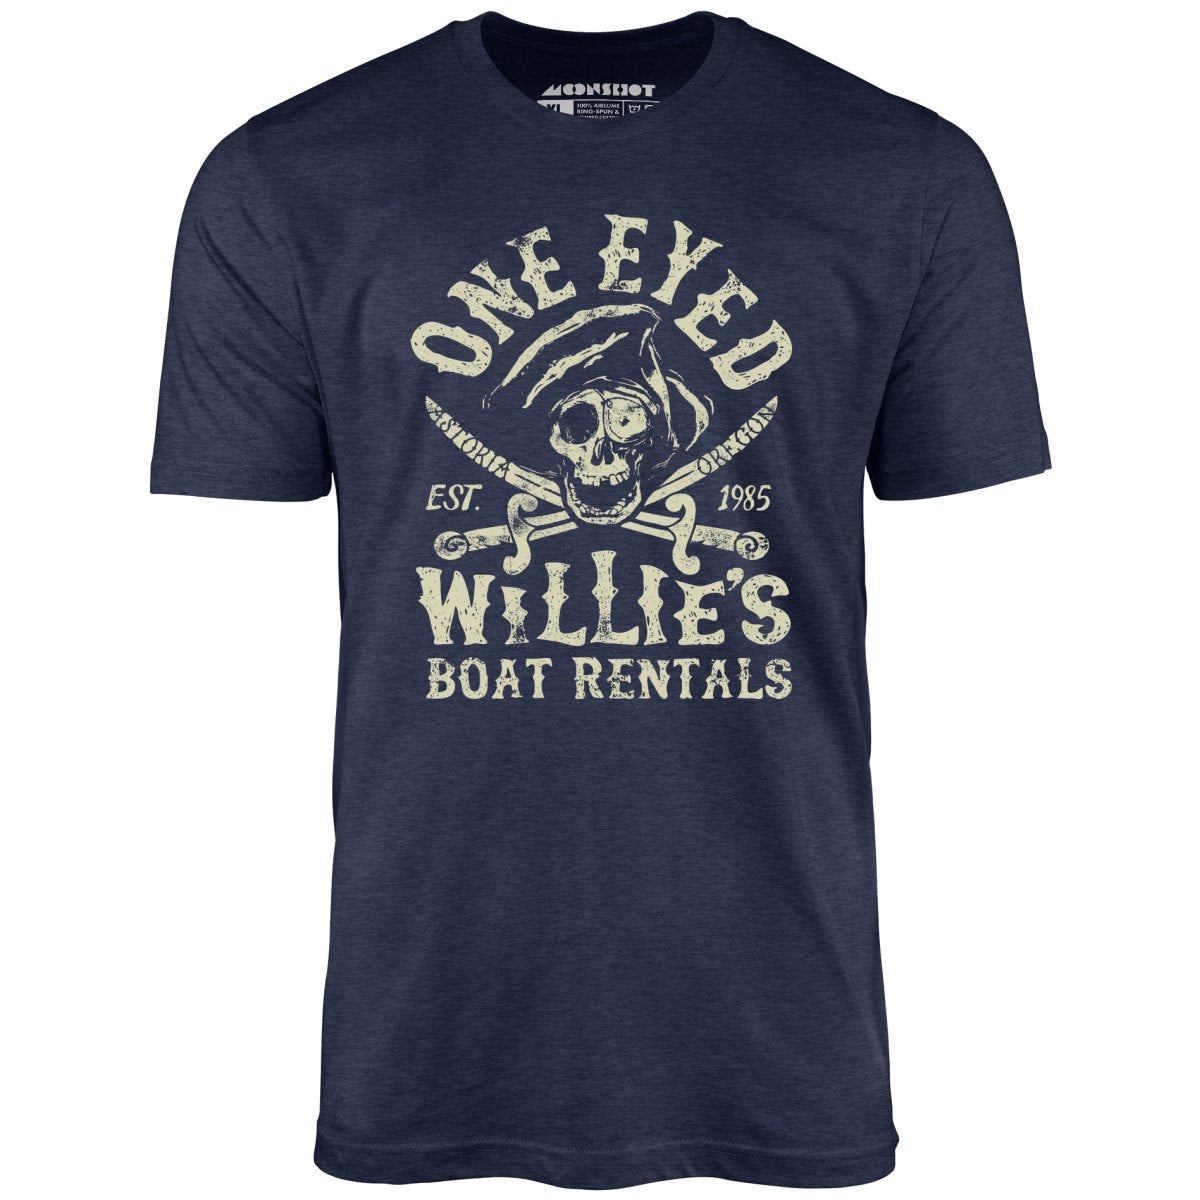 One Eyed Willie's Boat Rentals - Unisex T-Shirt